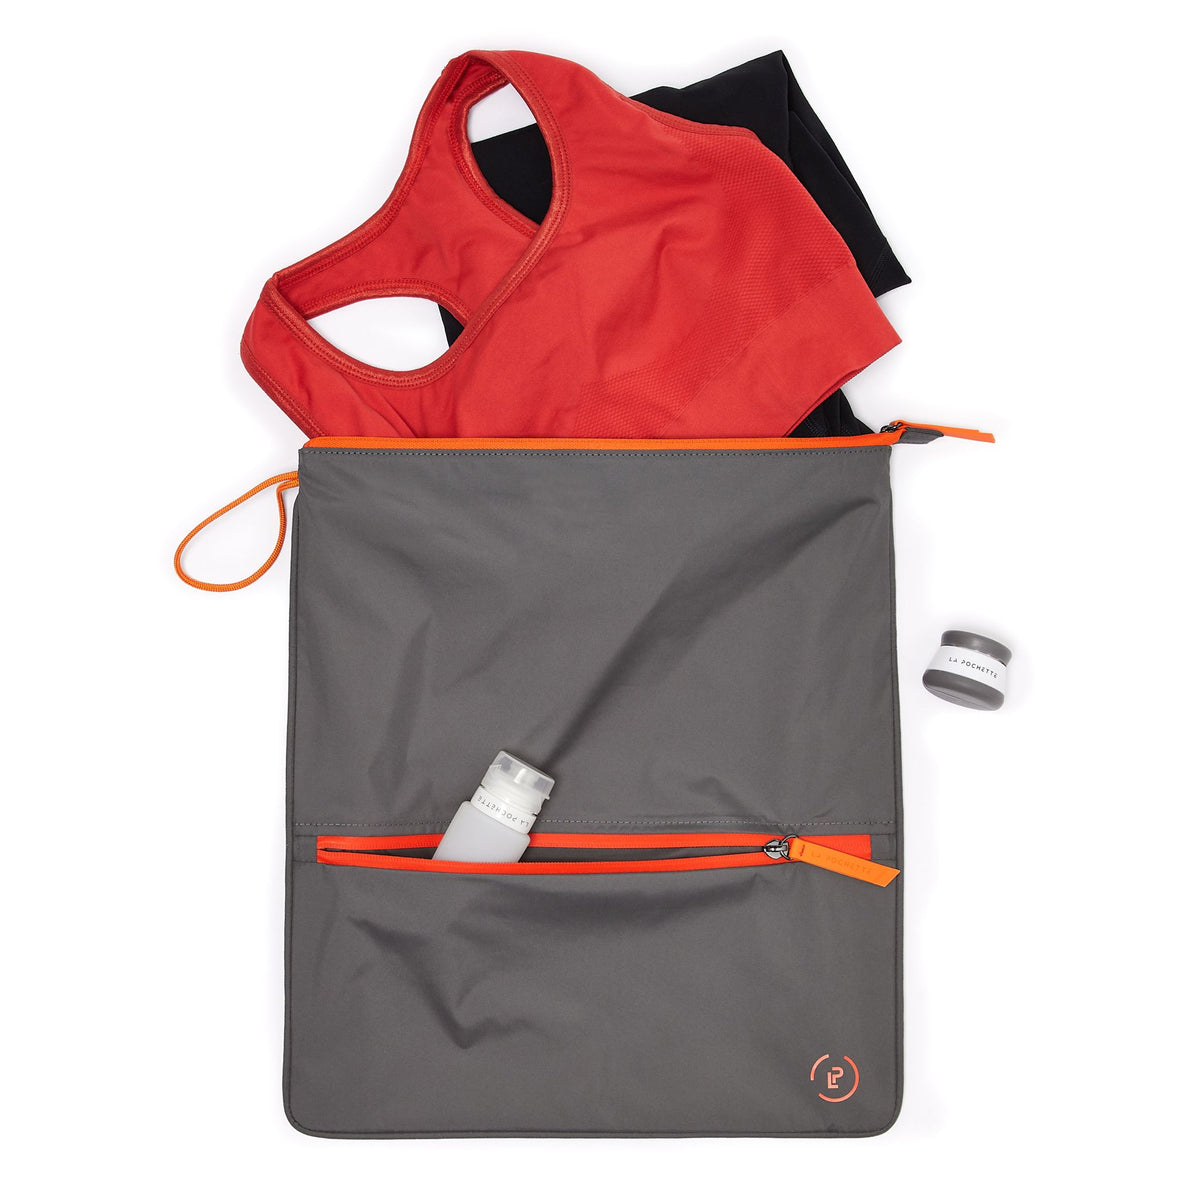 Pewter Flame Sweat Bag showing Front pocket open with La Pochette travel bottle, and gym gear inside bag.